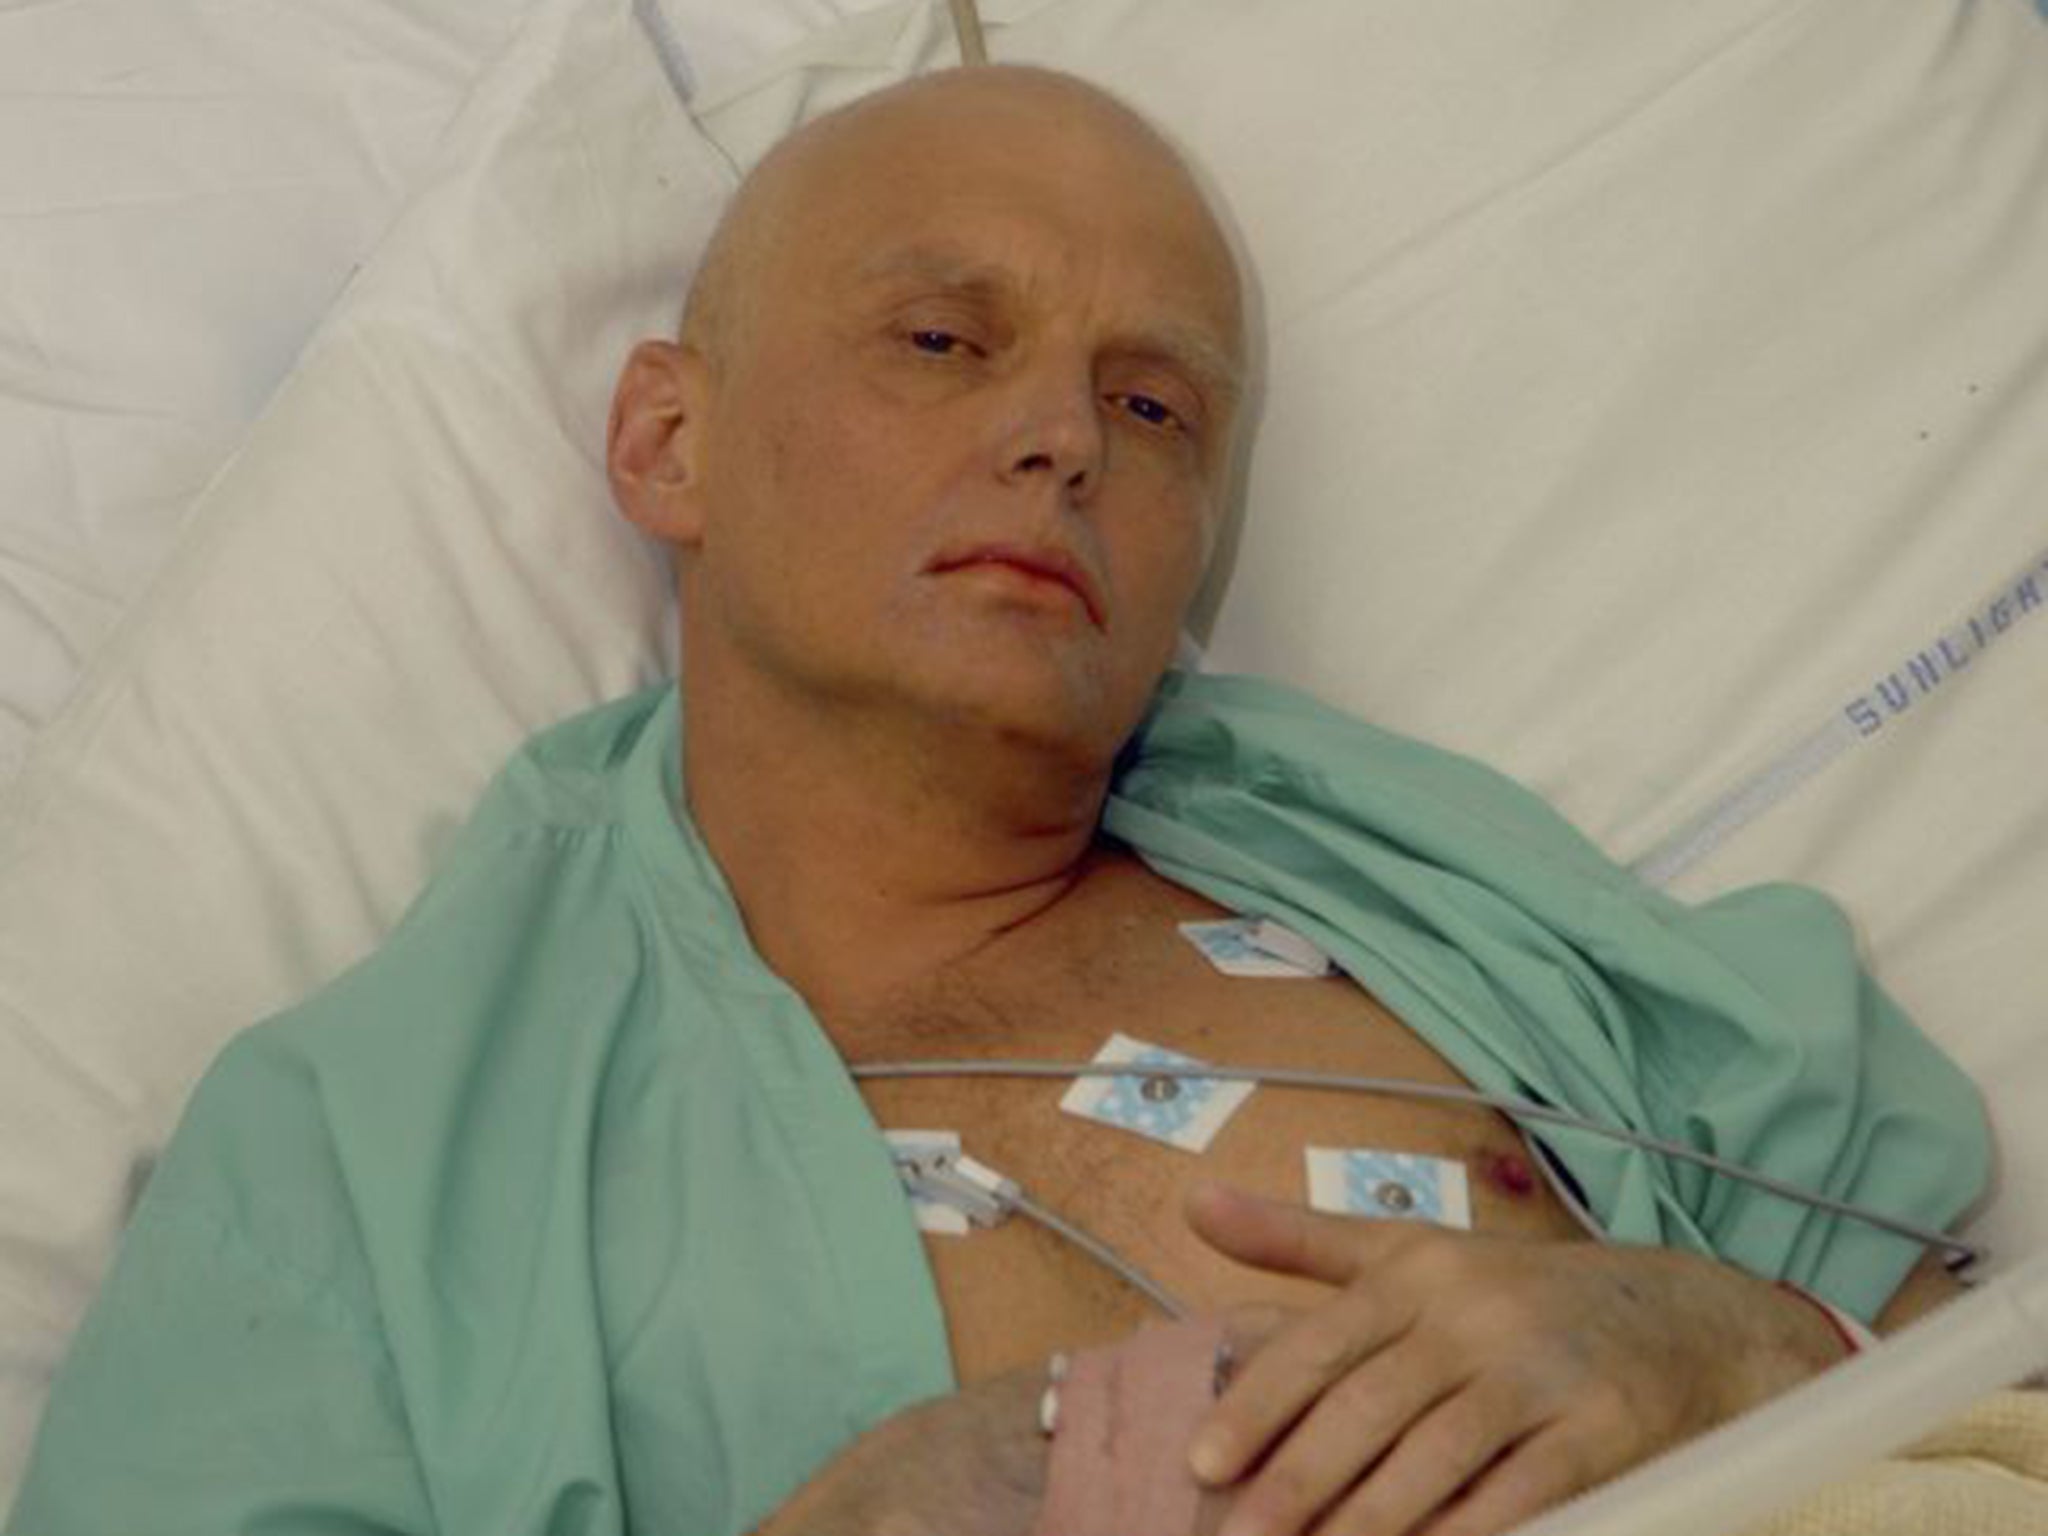 Russian intelligence officer Alexander Litvinenko was assassinated using polonium tea in London in 2006